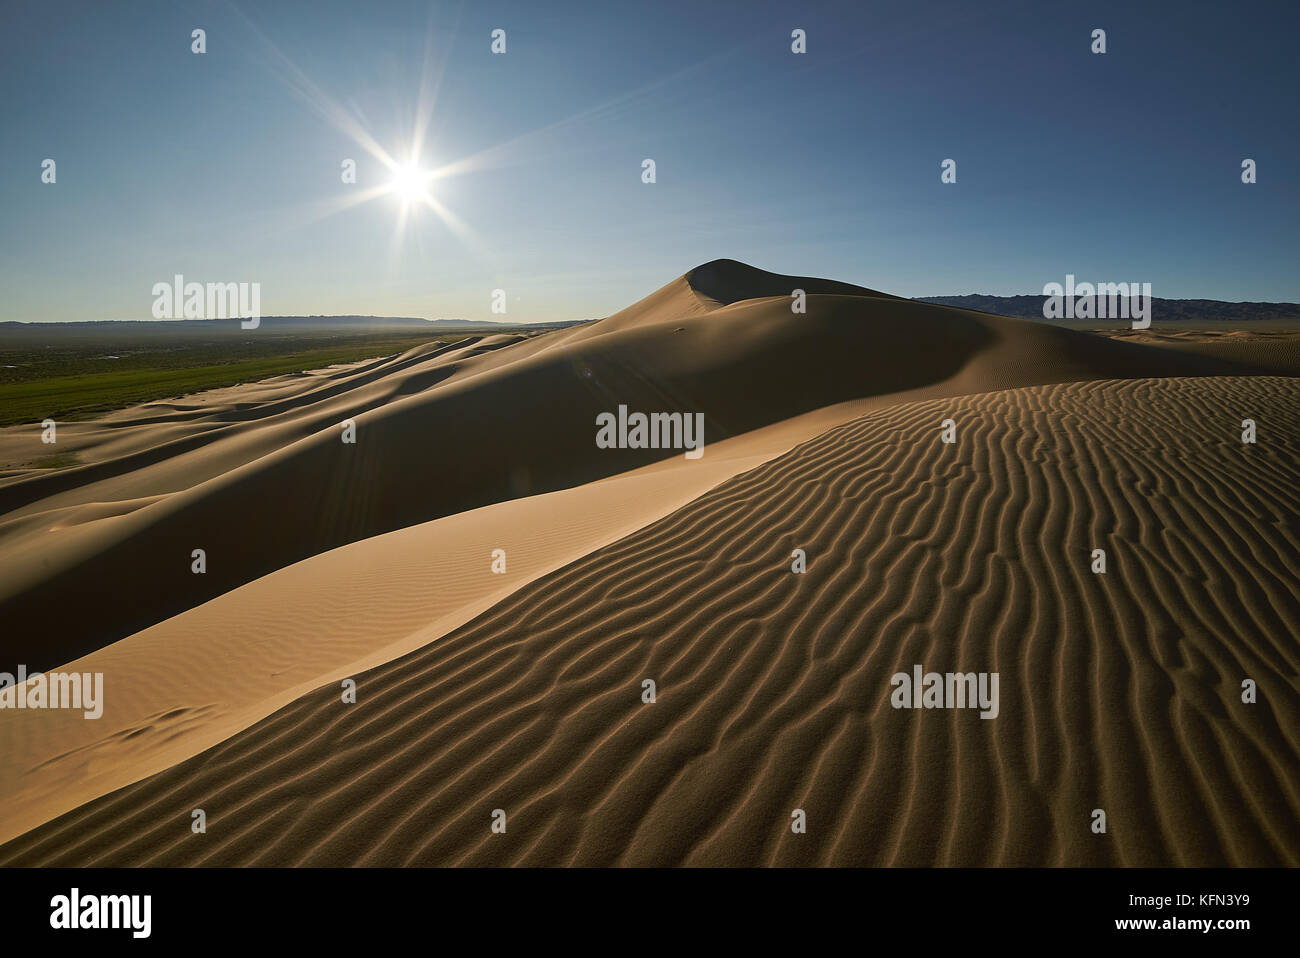 beautiful shot of a desert, wavy sand dunes, shinig sun and blue sky Stock Photo